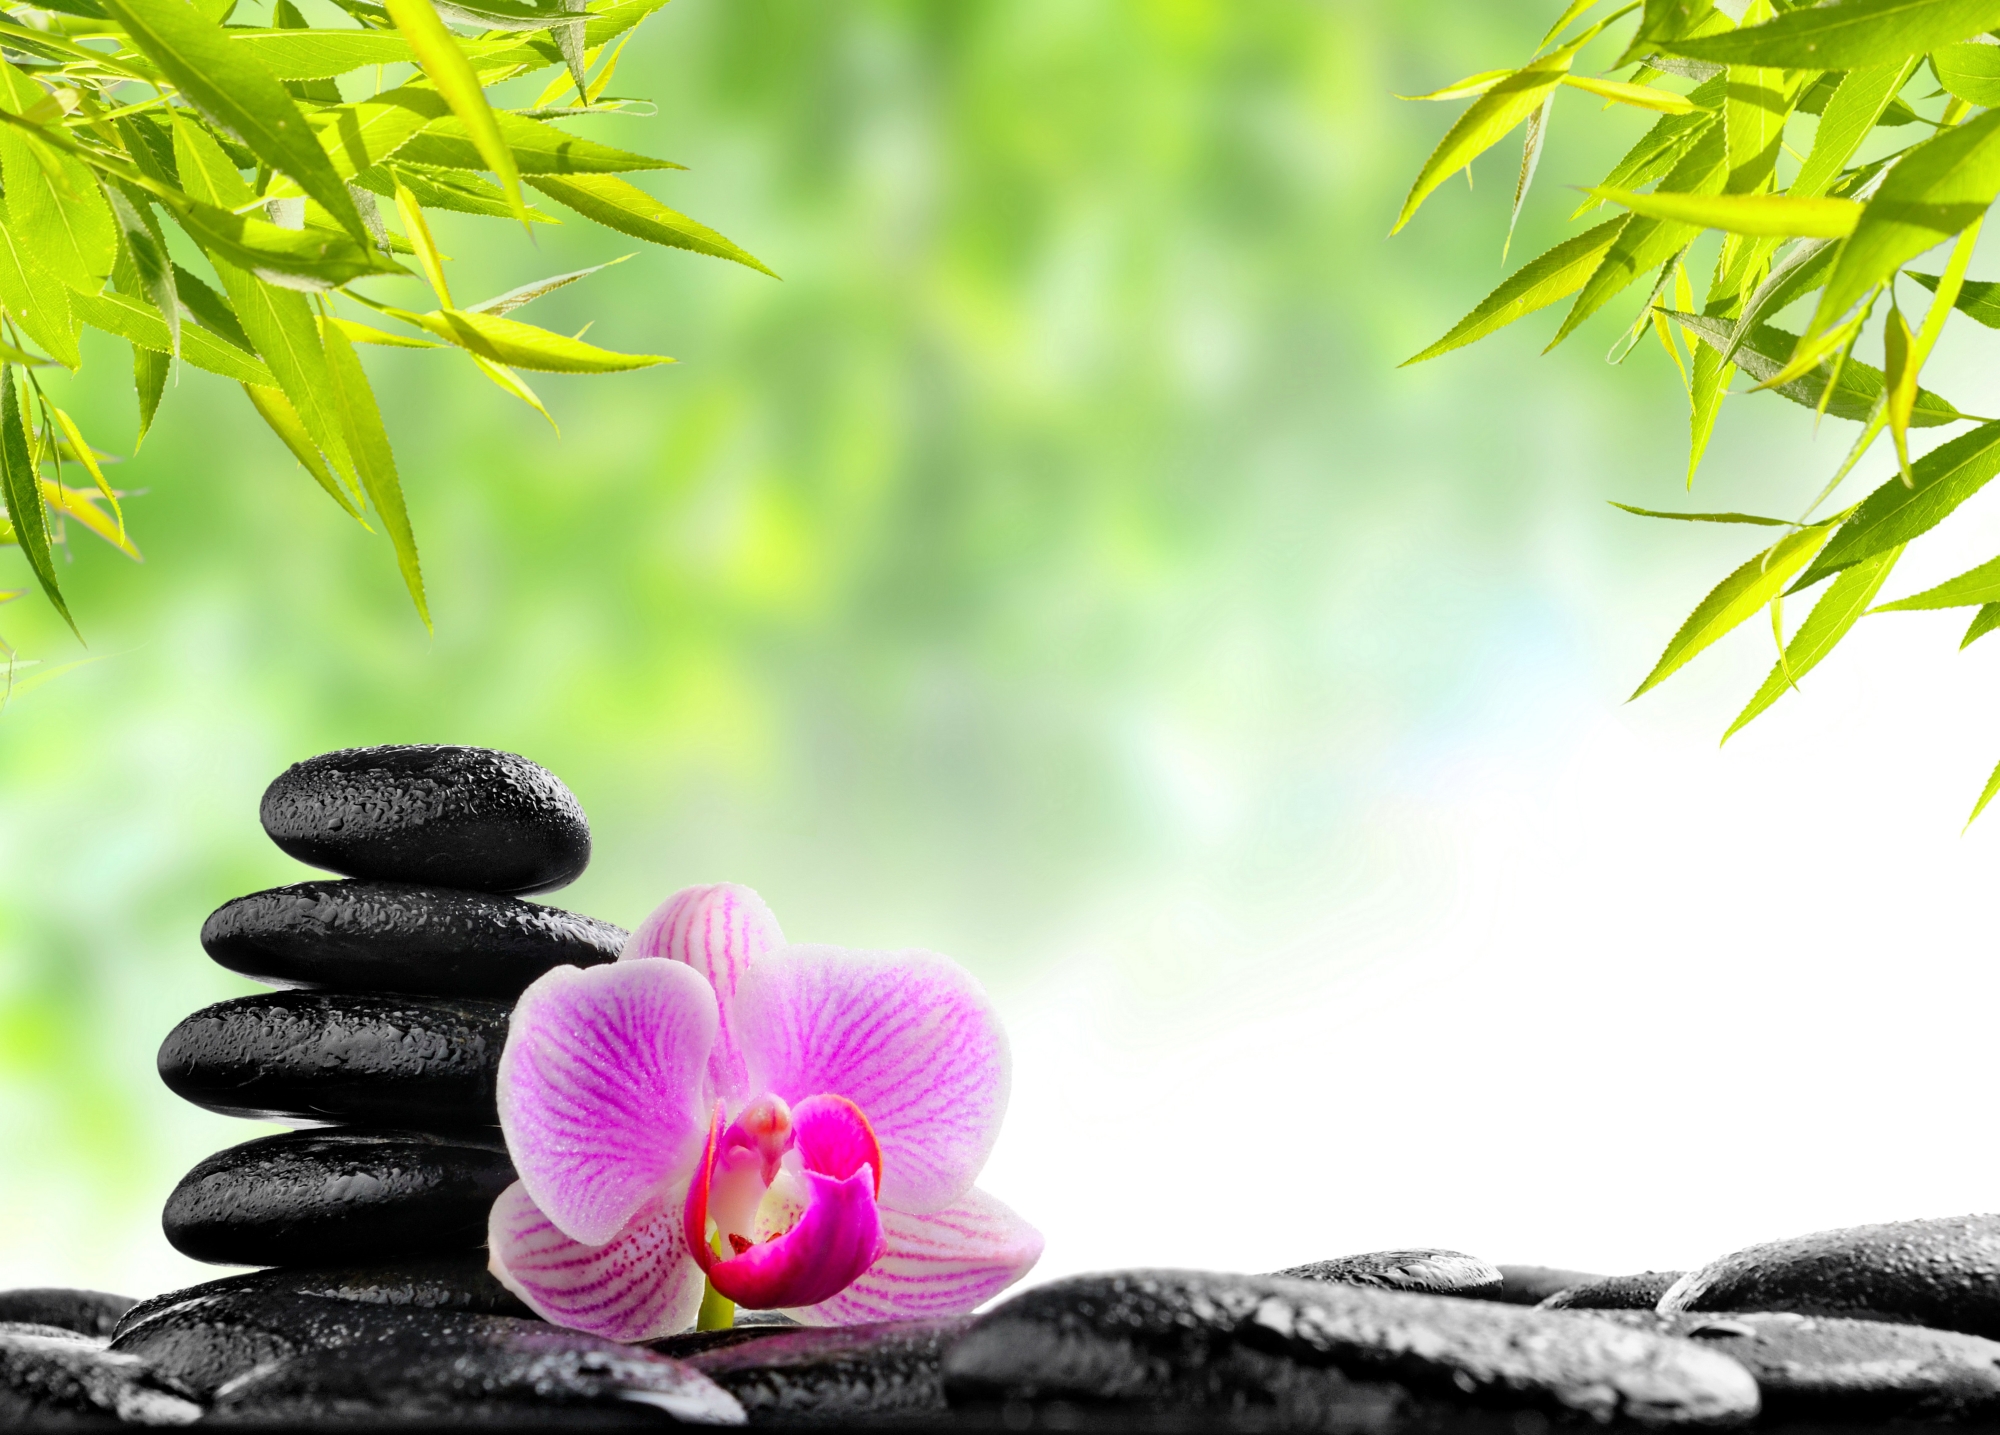 Zen Background The Mindfulness Meditation Institute